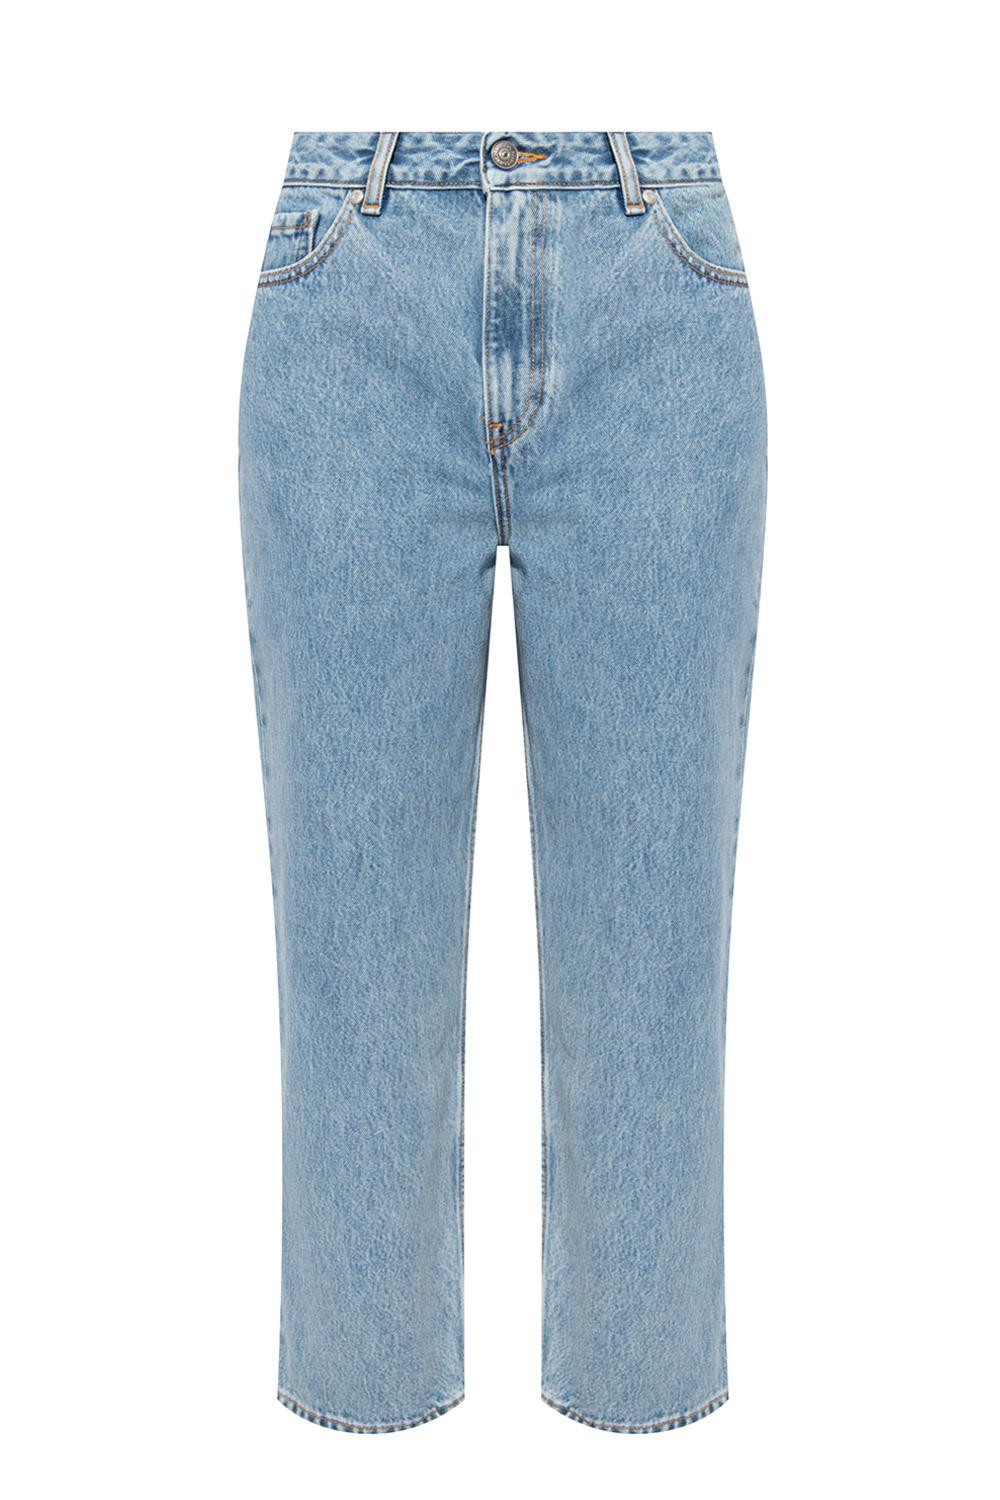 Ganni Denim High-waisted Jeans in Blue | Lyst